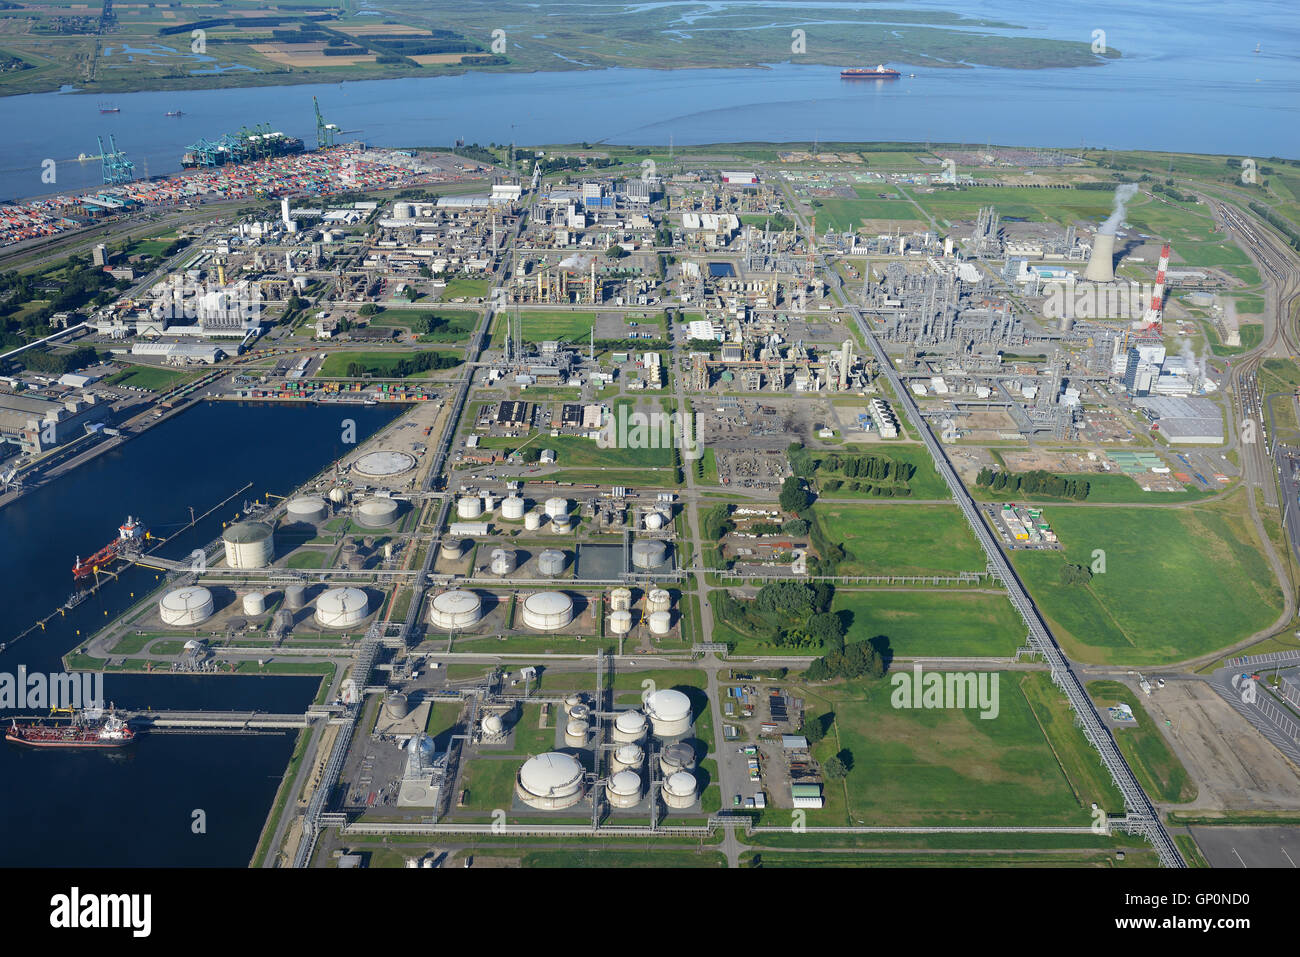 AERIAL VIEW. Chemical production site of BASF Antwerpen. Antwerp Harbor, Flemish Region, Belgium. Stock Photo